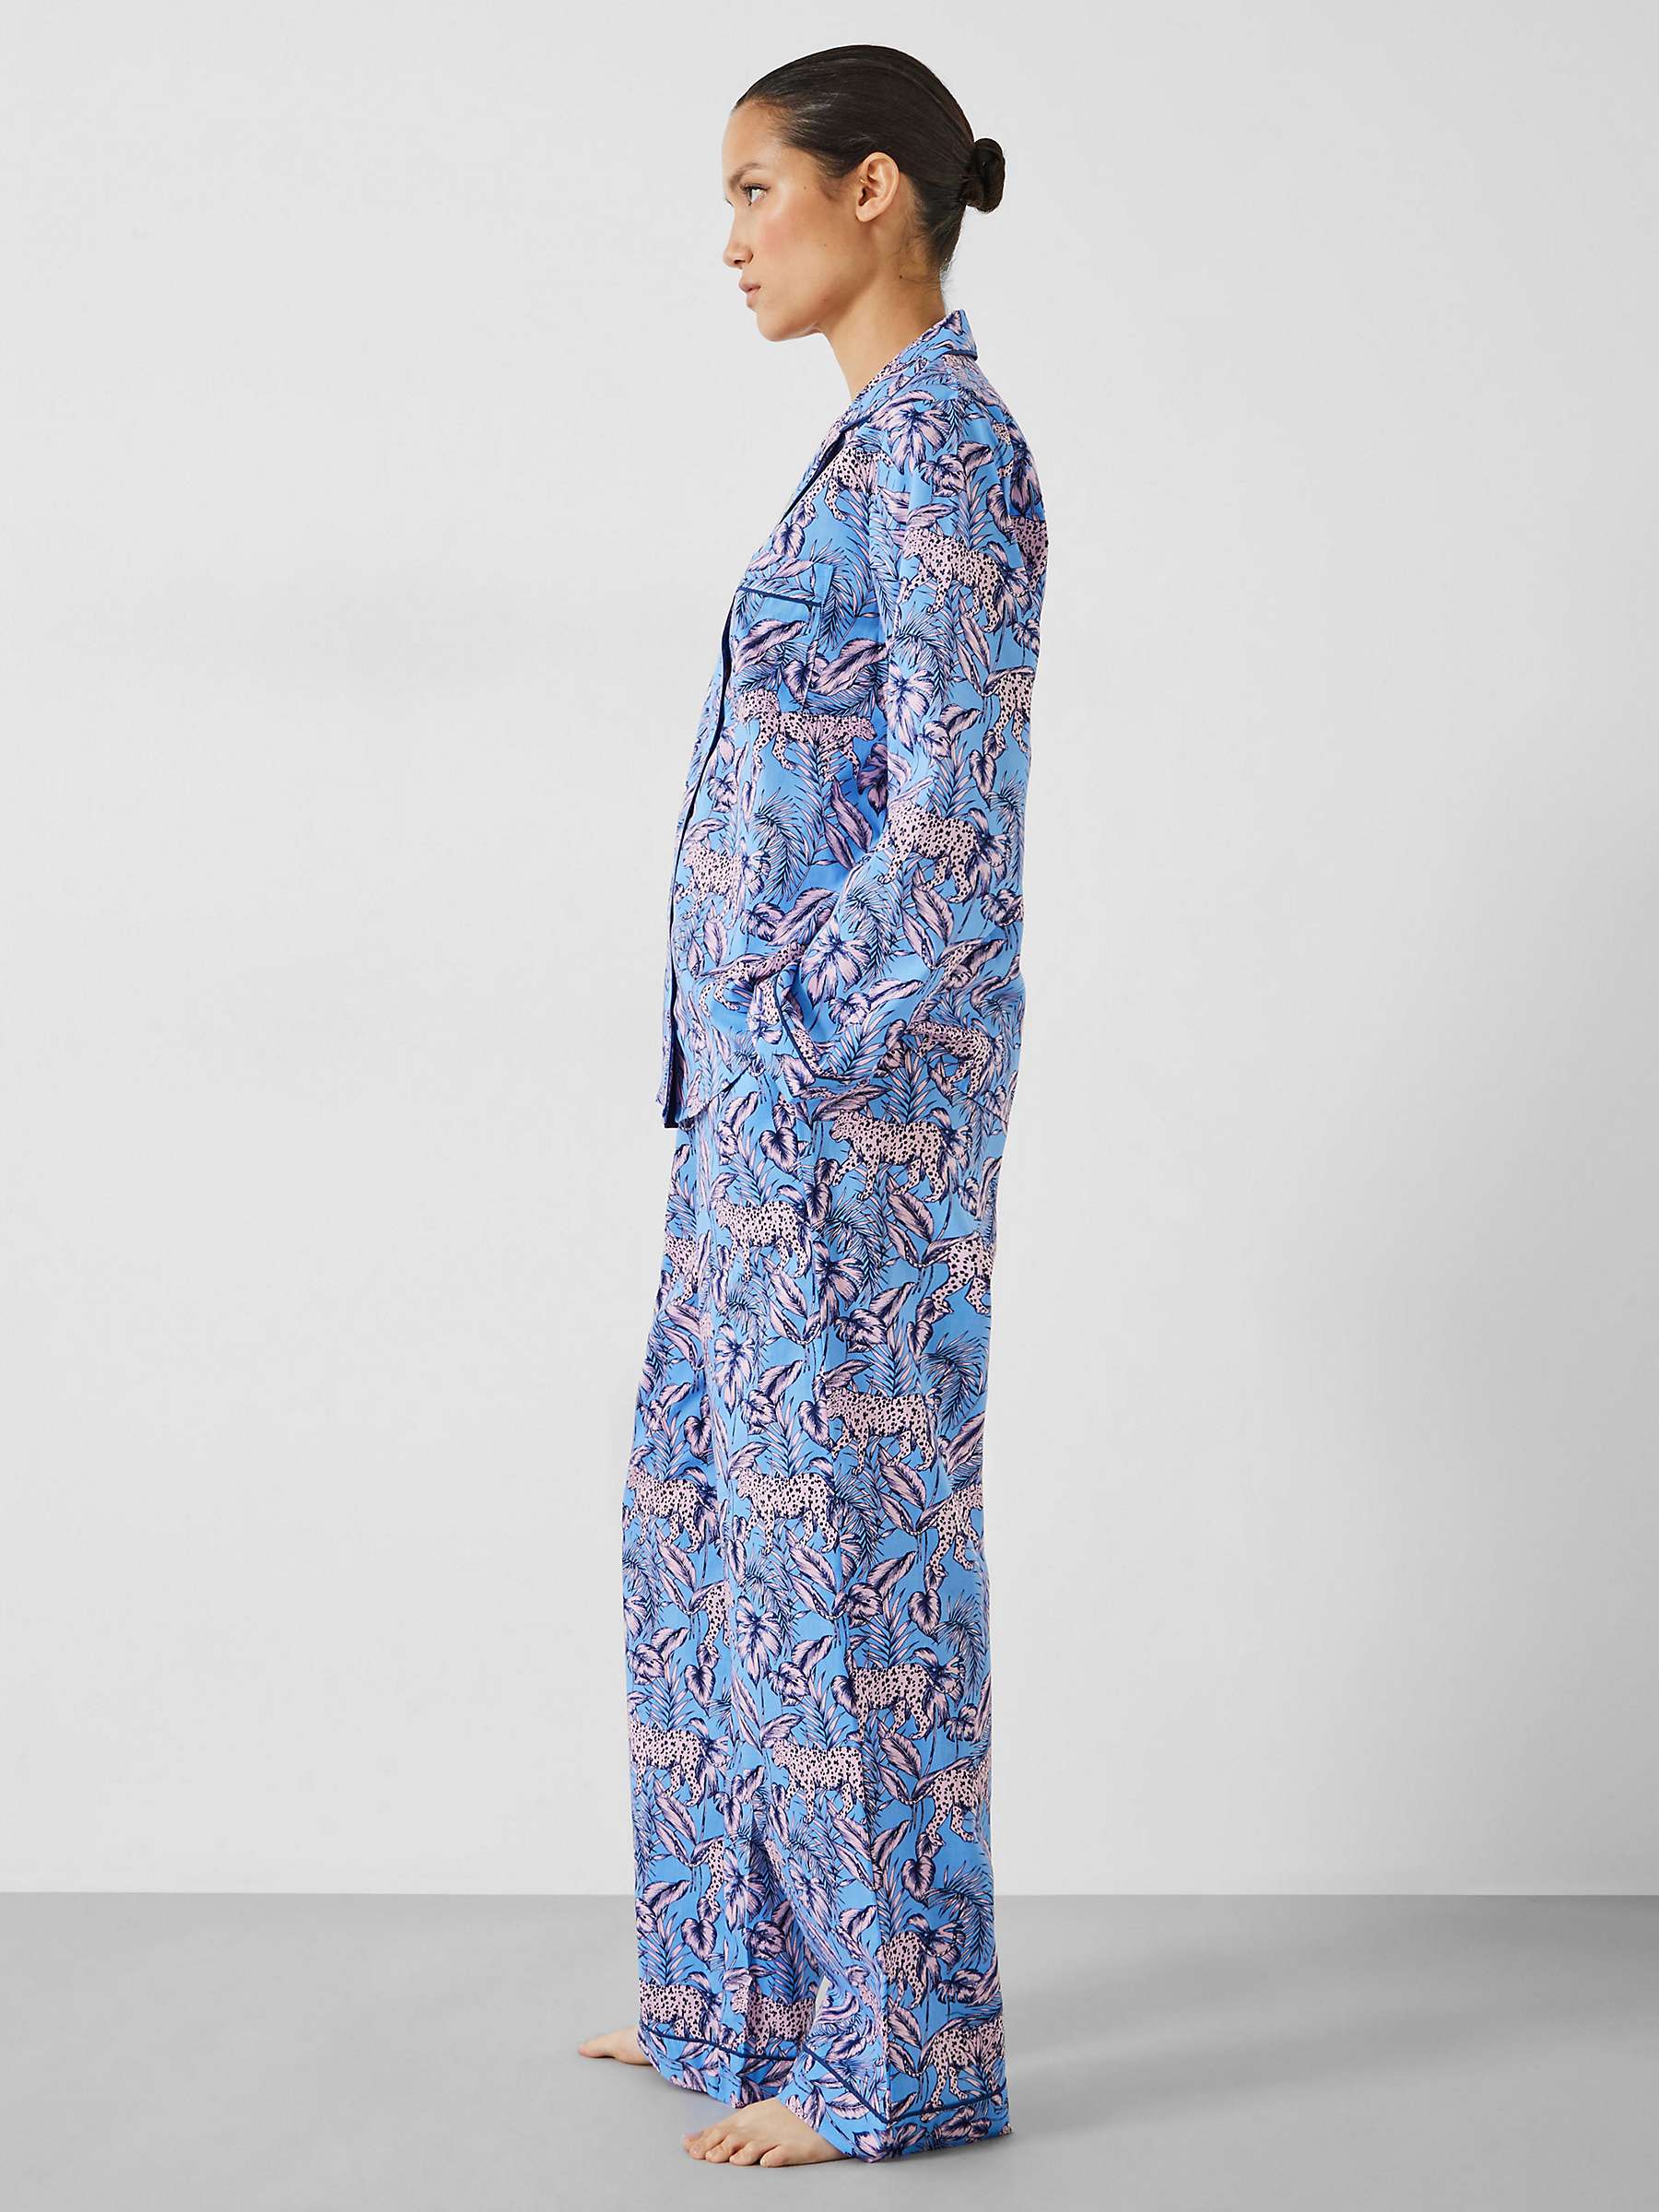 HUSH Isla Printed Cotton Pyjama Set, Pink/Blue at John Lewis & Partners